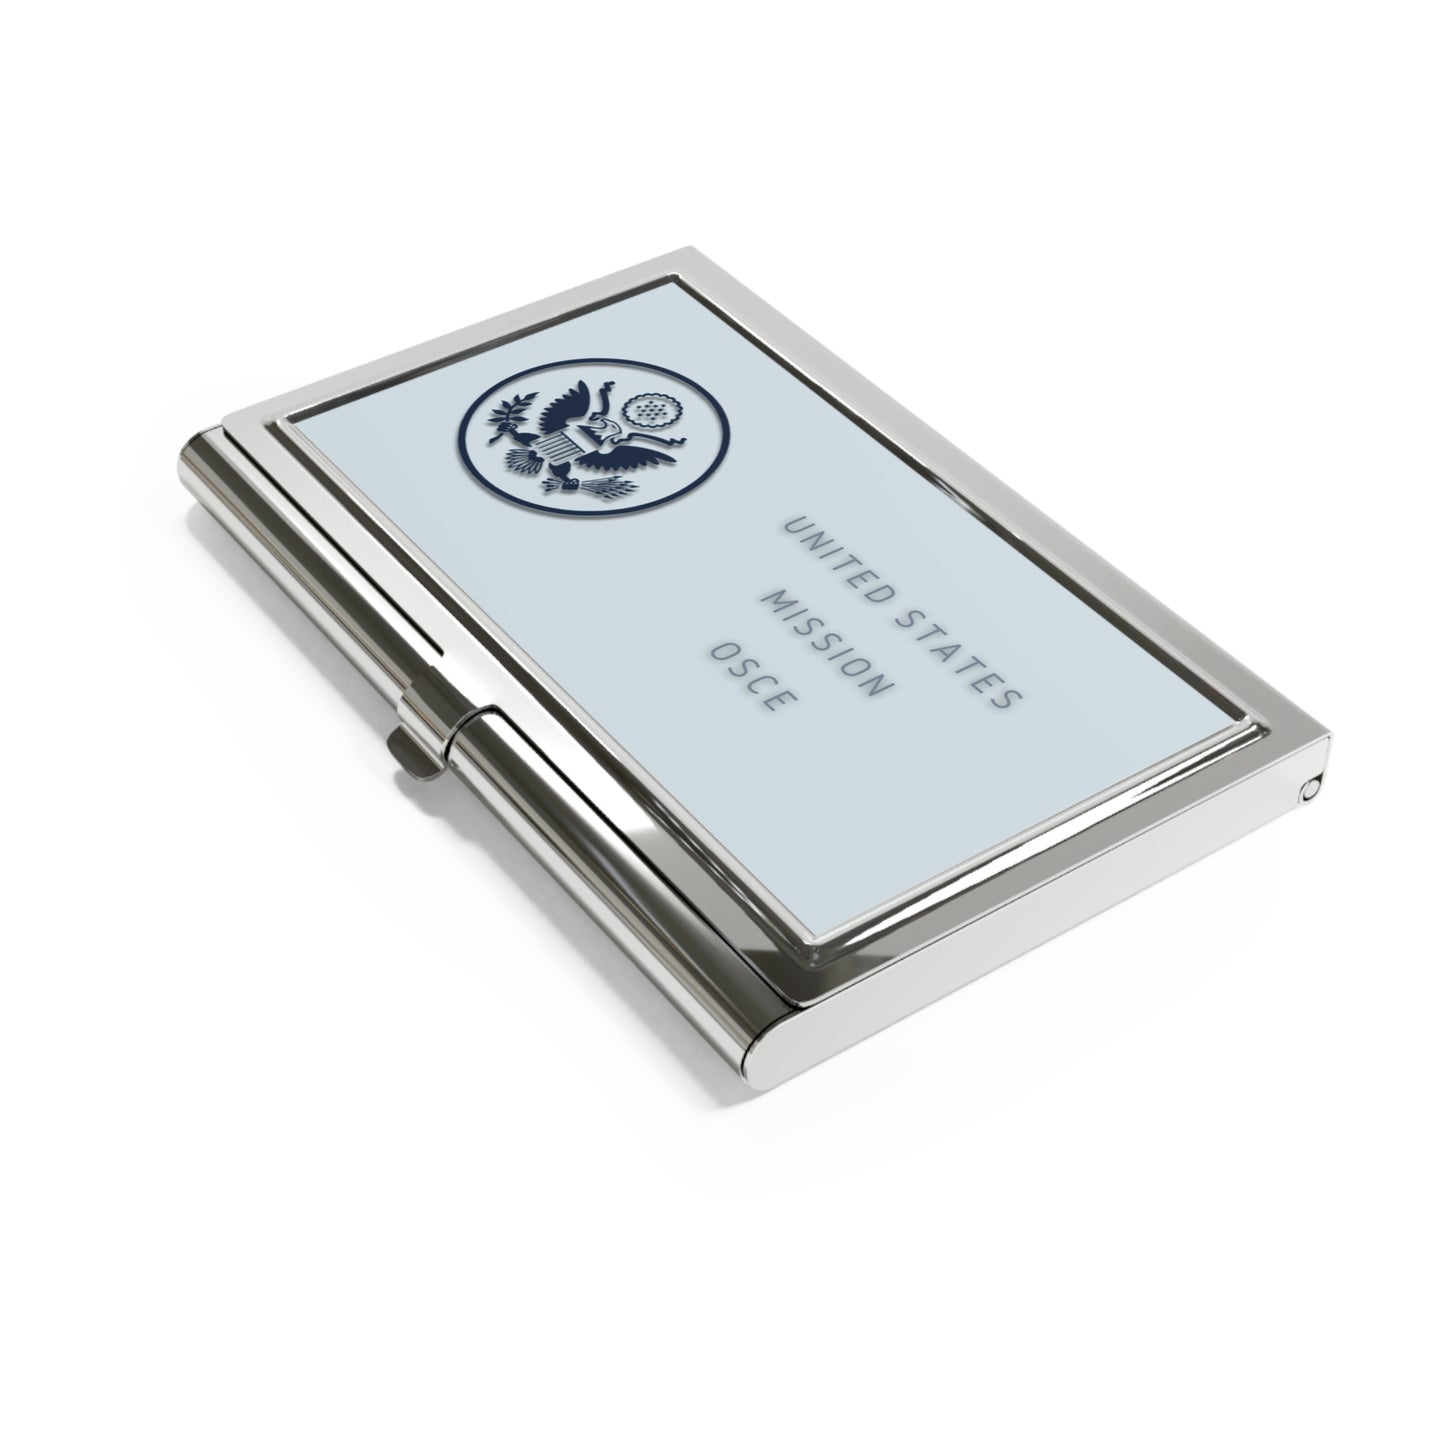 Business Card Holder: OSCE